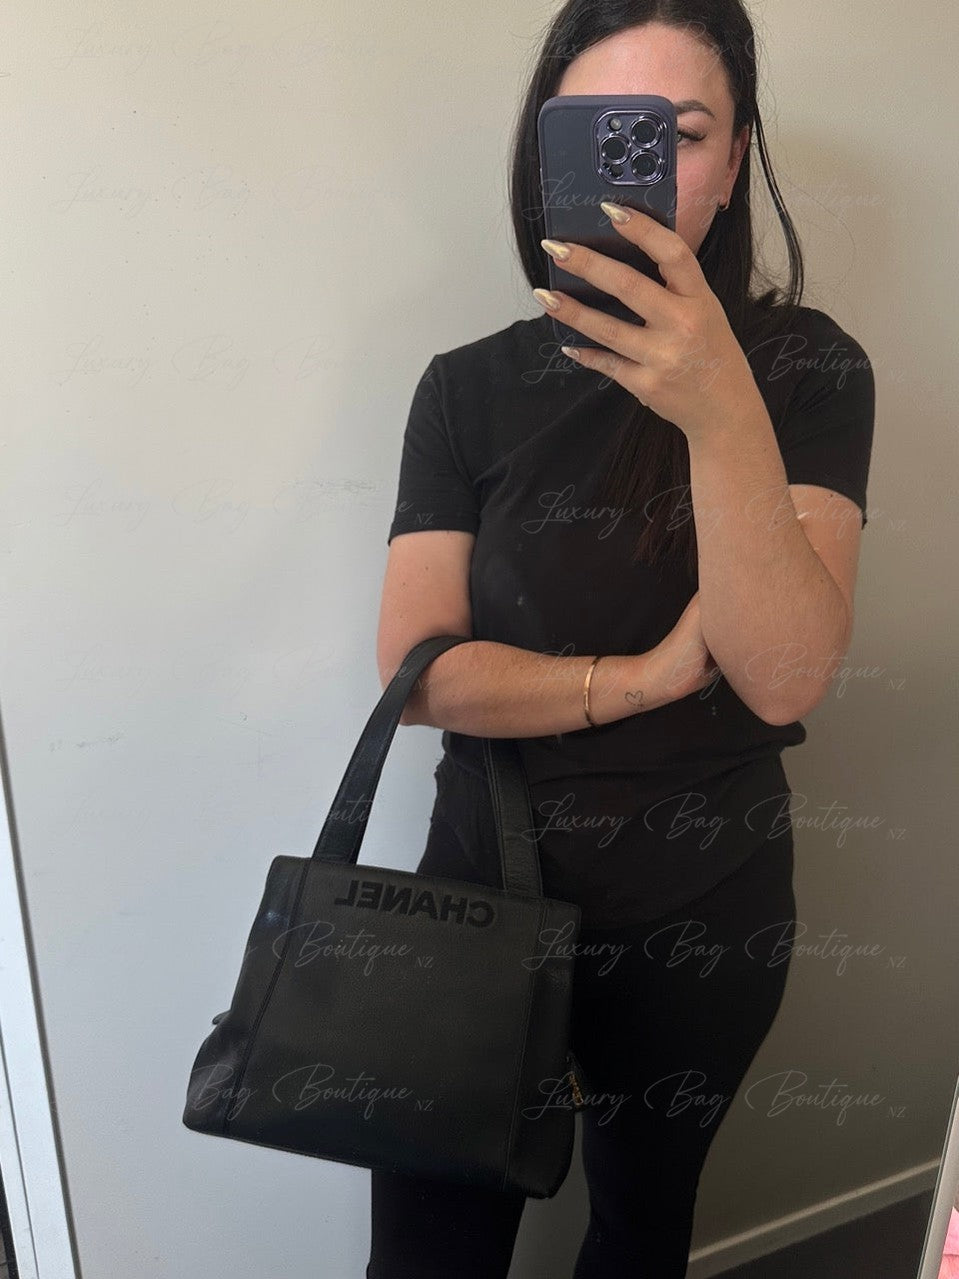 Chanel Small Tote Bag